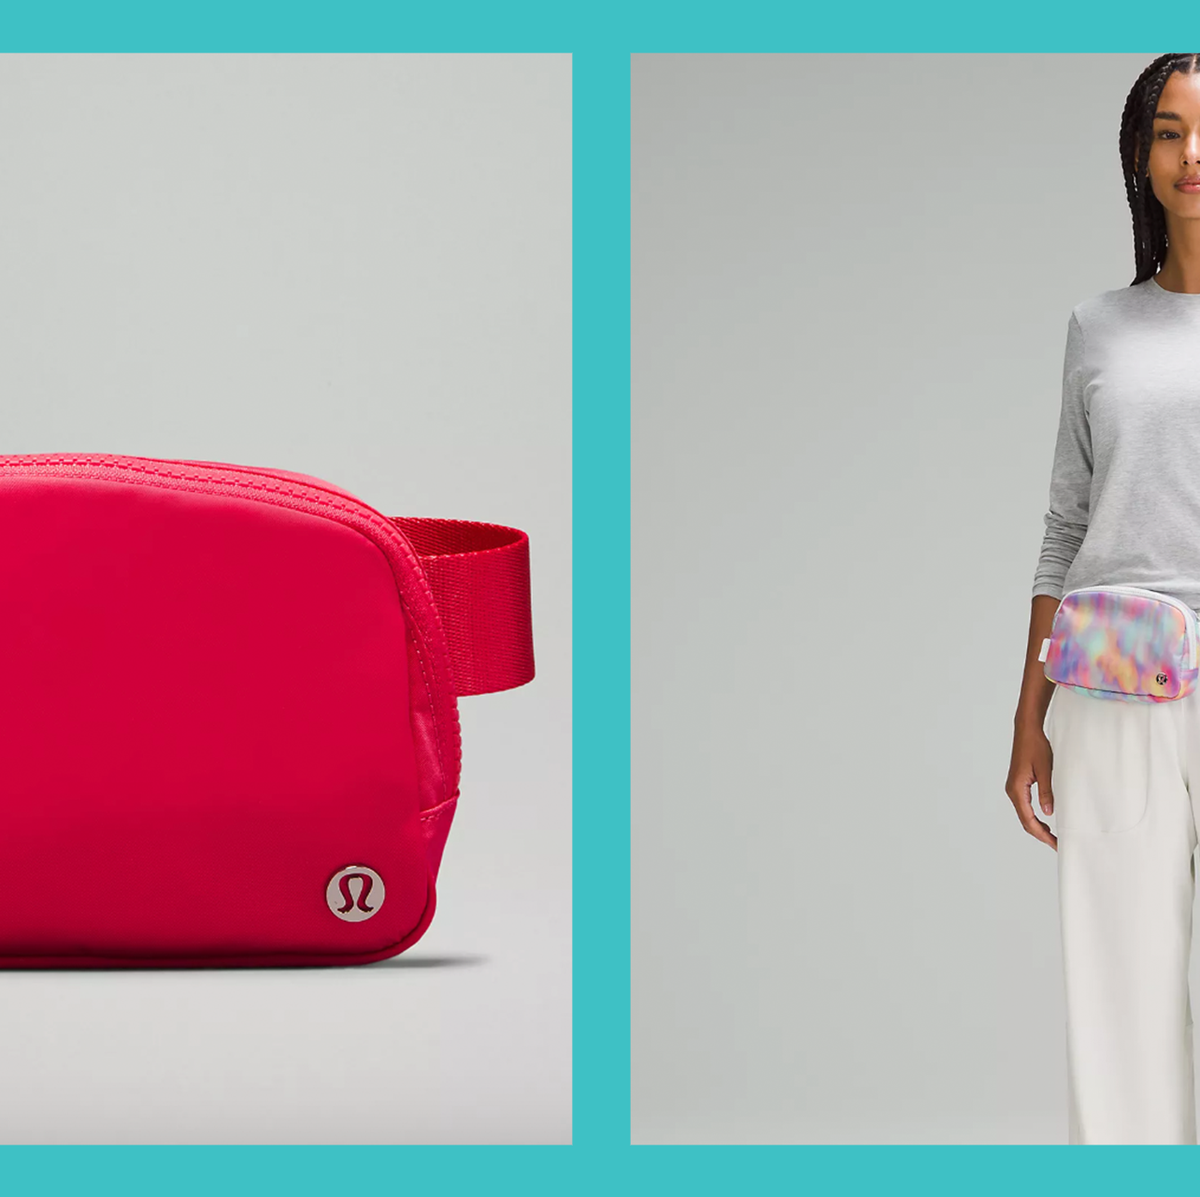  Lululemon Everywhere Belt Bag, 1L (Carnation Red) : Clothing,  Shoes & Jewelry